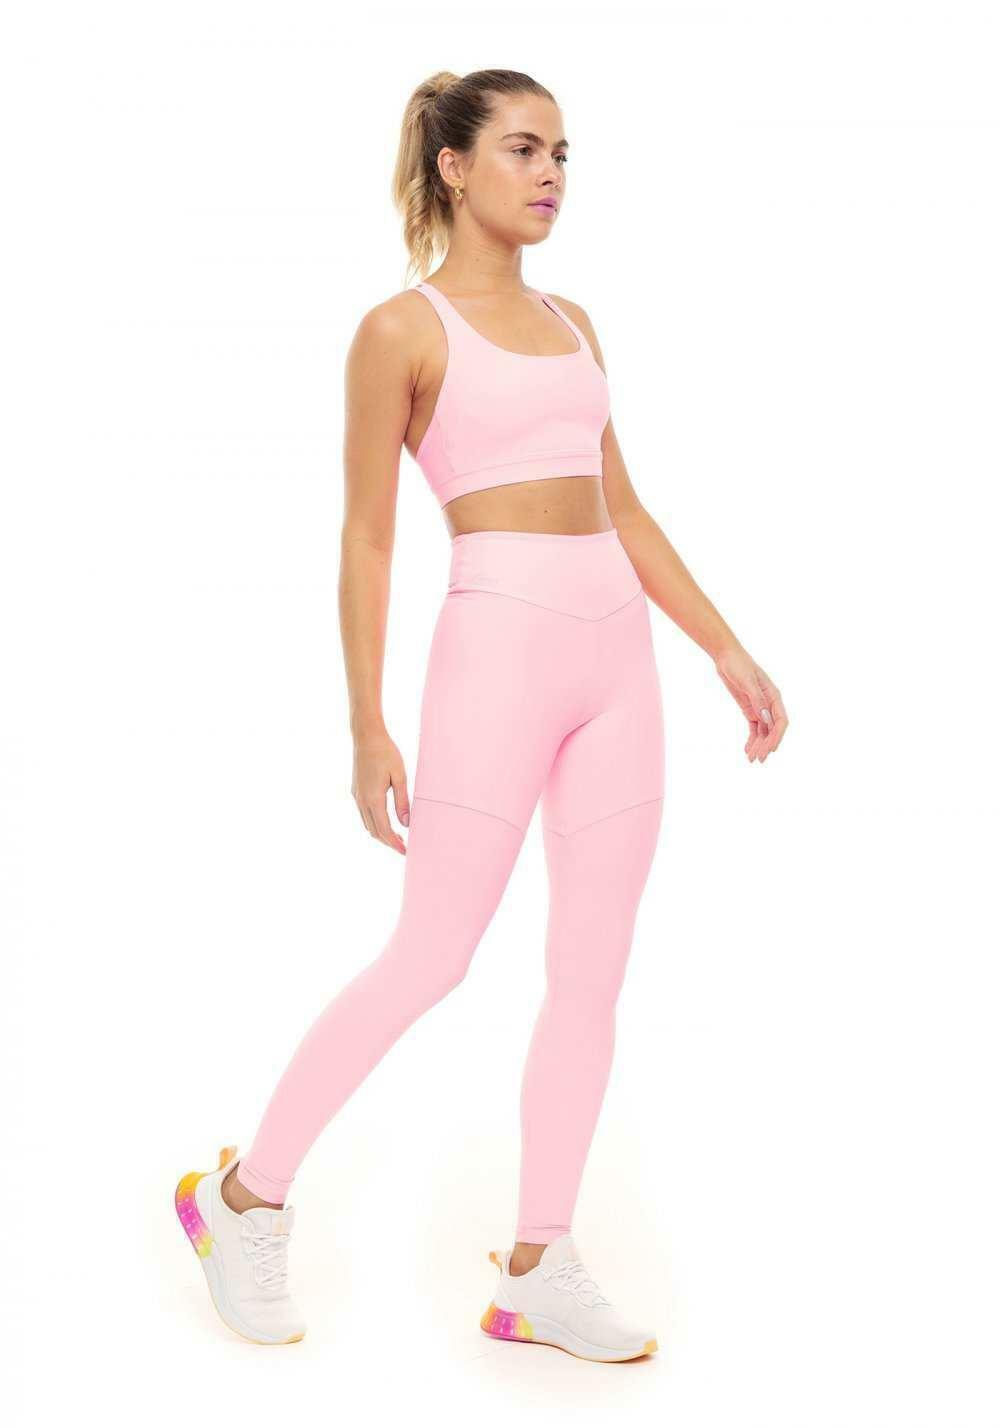 Atletika Fashion Legging - Pop Pink